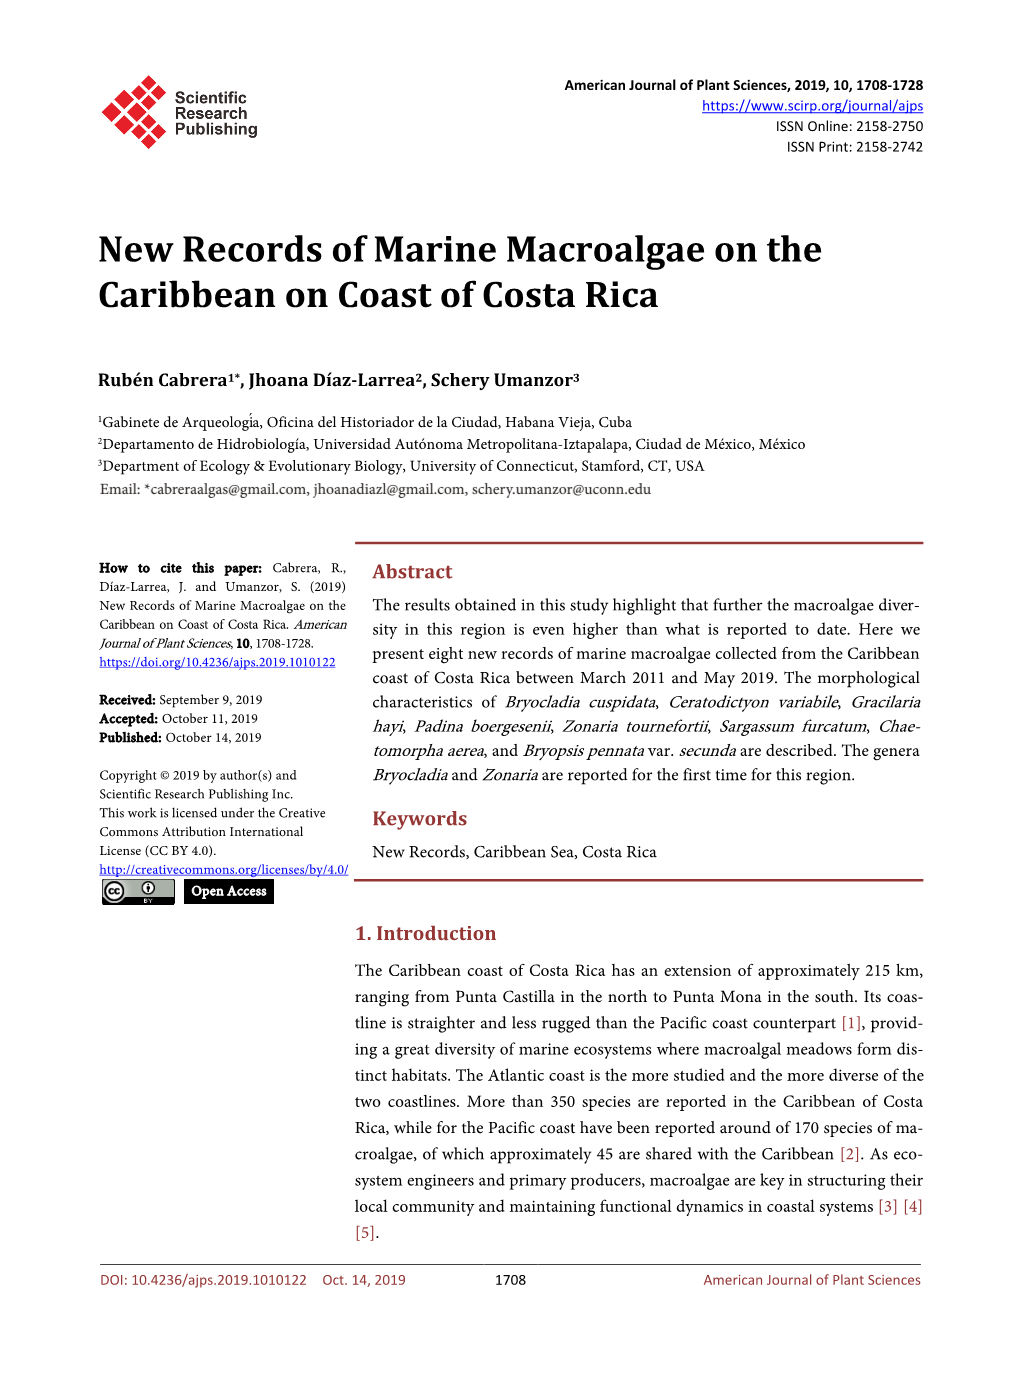 New Records of Marine Macroalgae on the Caribbean on Coast of Costa Rica